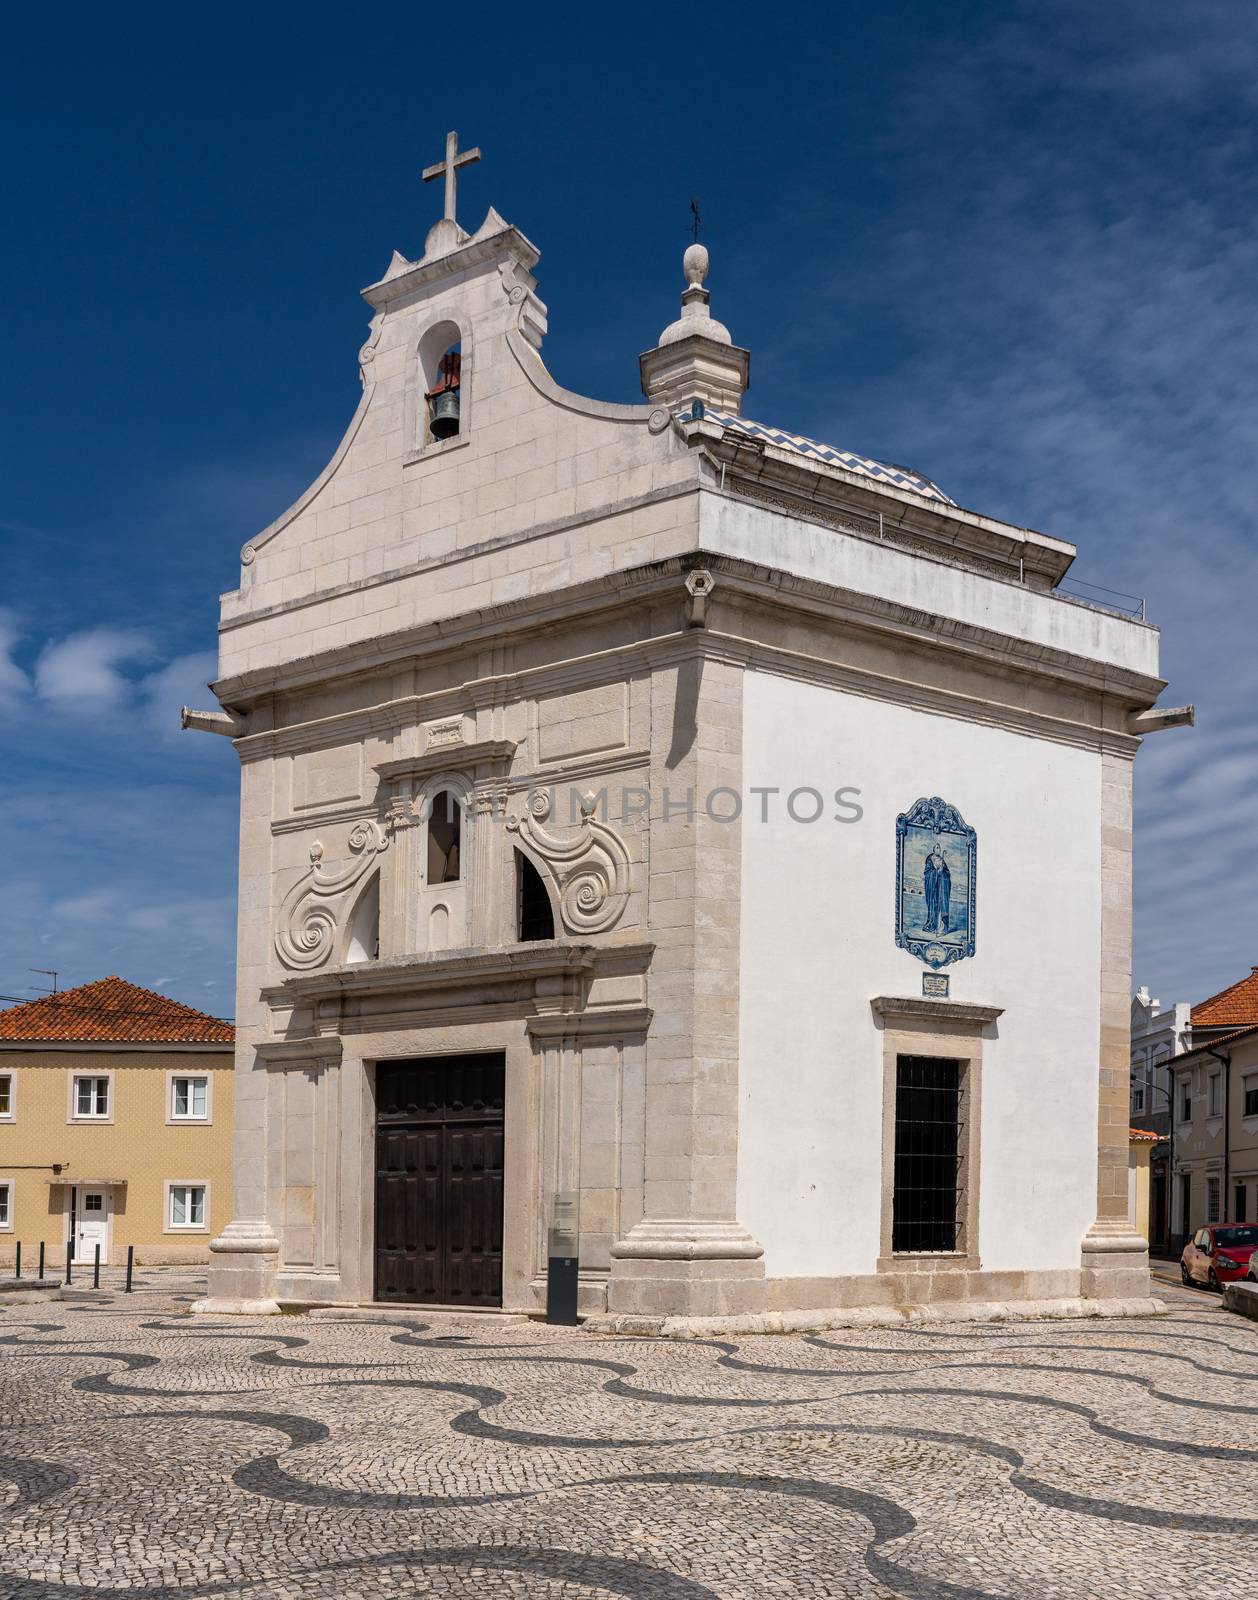 Capela de Sao Goncalinho, the patron saint of Aveiro in Portugal by steheap